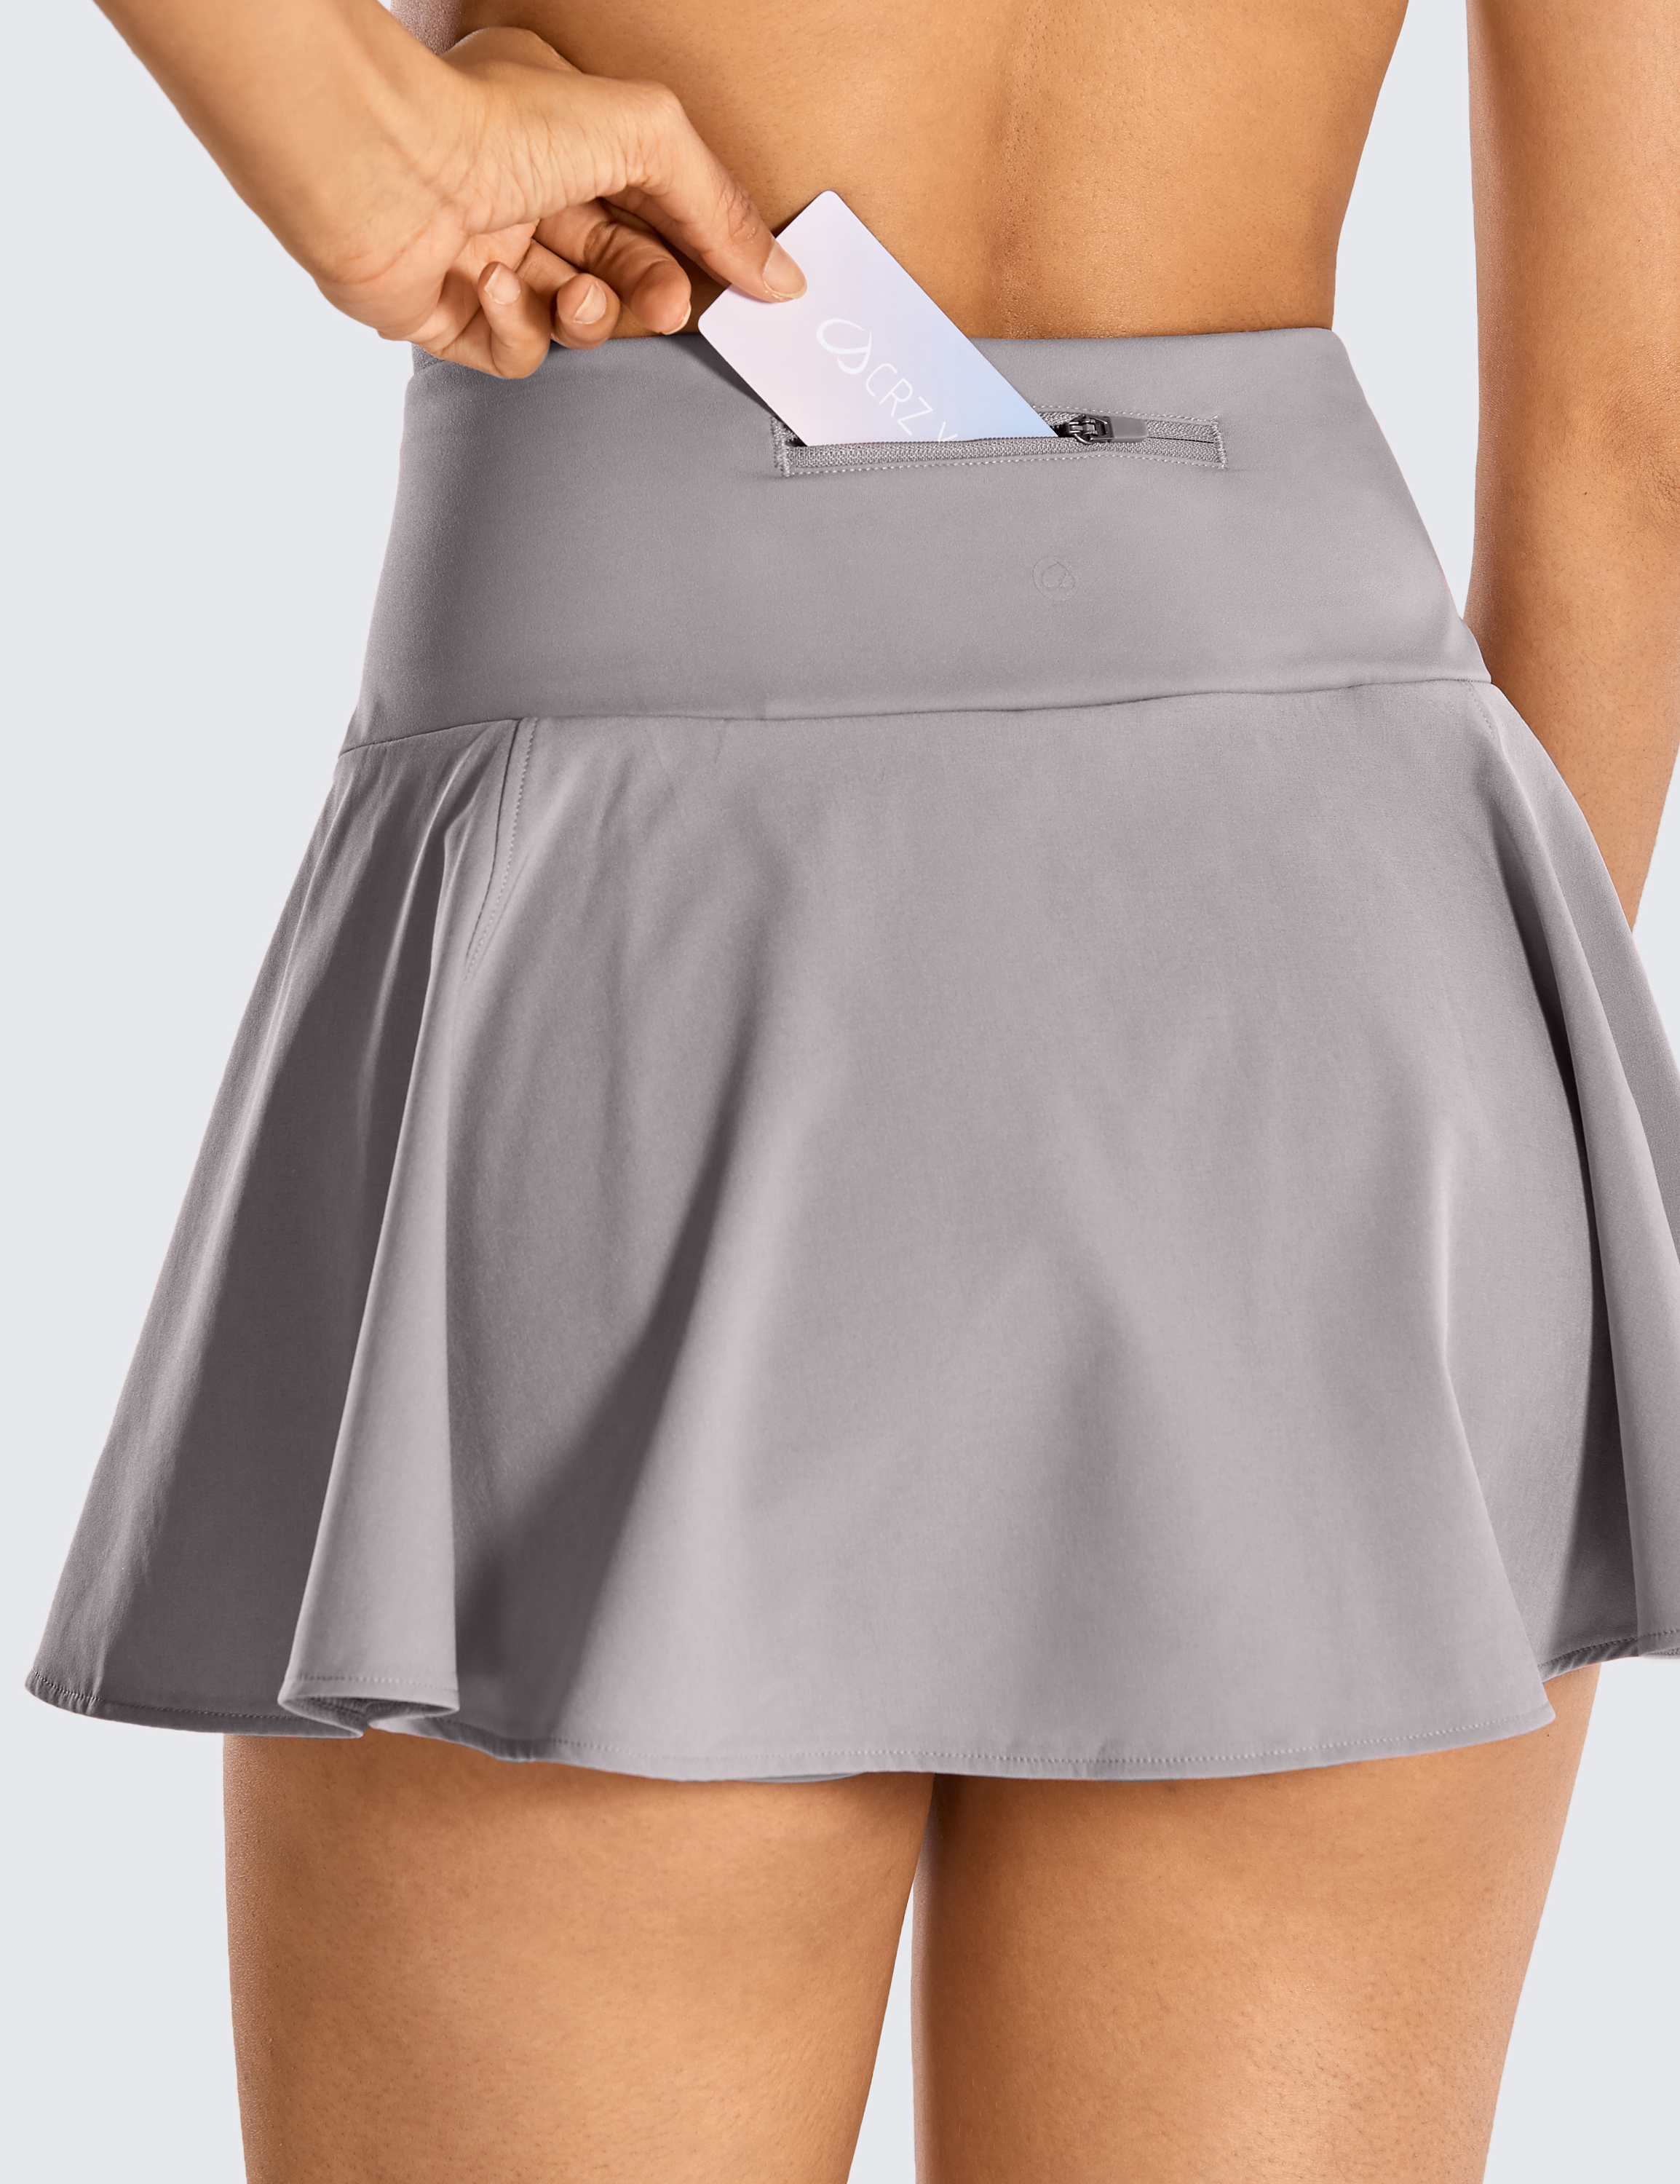 Women's Quick Dry High Waisted Tennis Skirt Pleated Sport Athletic Golf  Skort | eBay